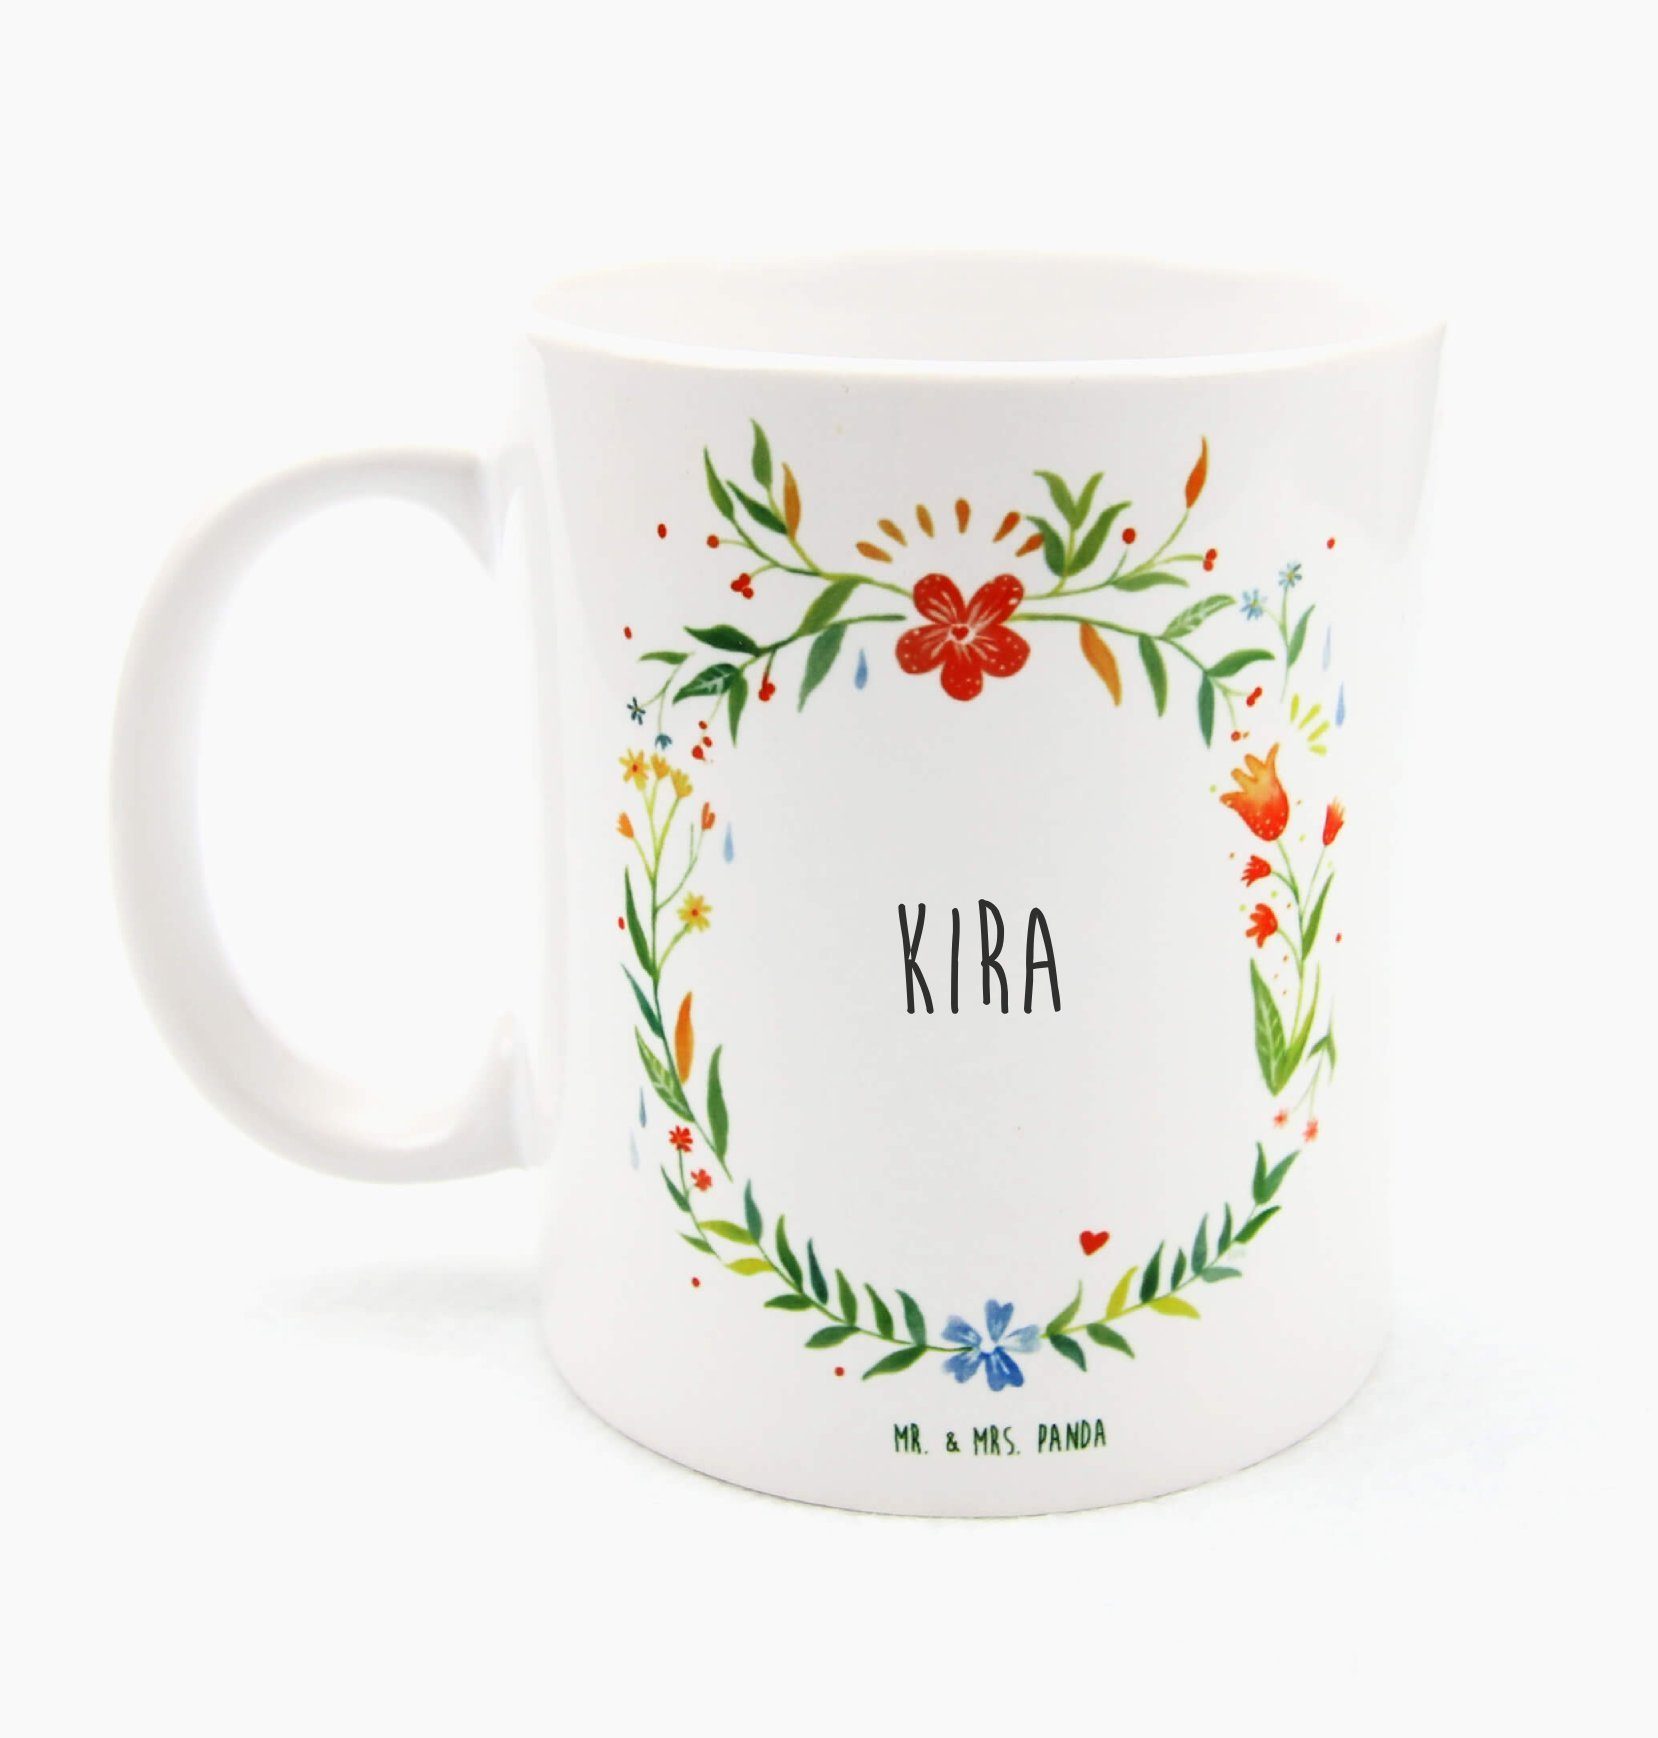 Mr. & Mrs. Panda Tasse Kira - Geschenk, Keramiktasse, Becher, Tasse Motive, Teetasse, Kaffee, Keramik